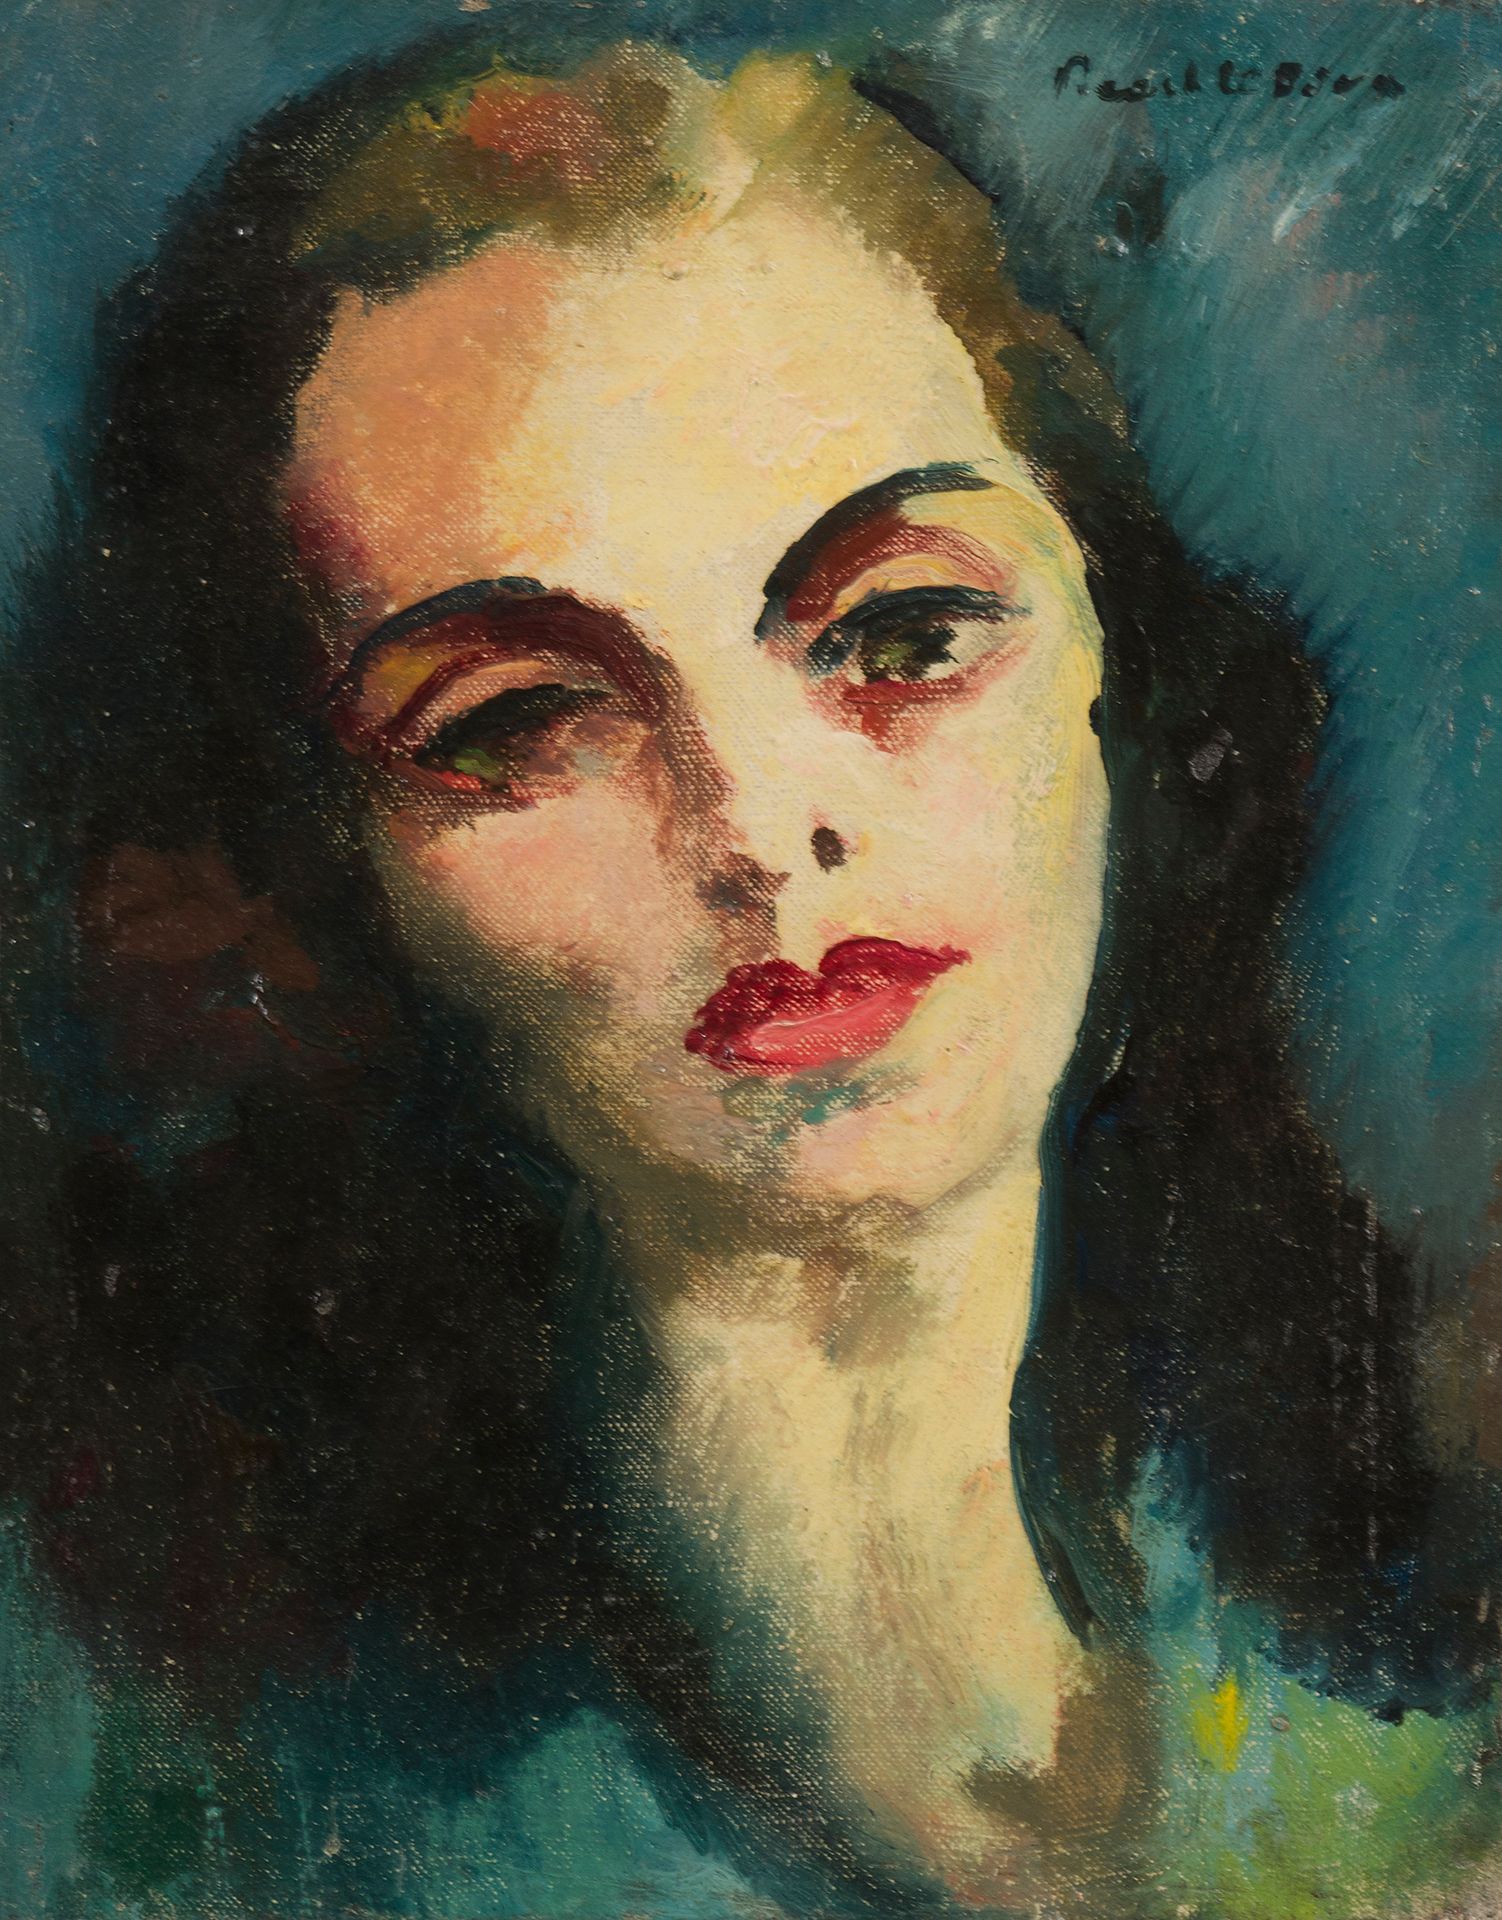 Null 查尔斯-皮卡特-勒杜 (1881-1959)
肖像，1950年
布面油画，右上角有签名
24 x 19厘米